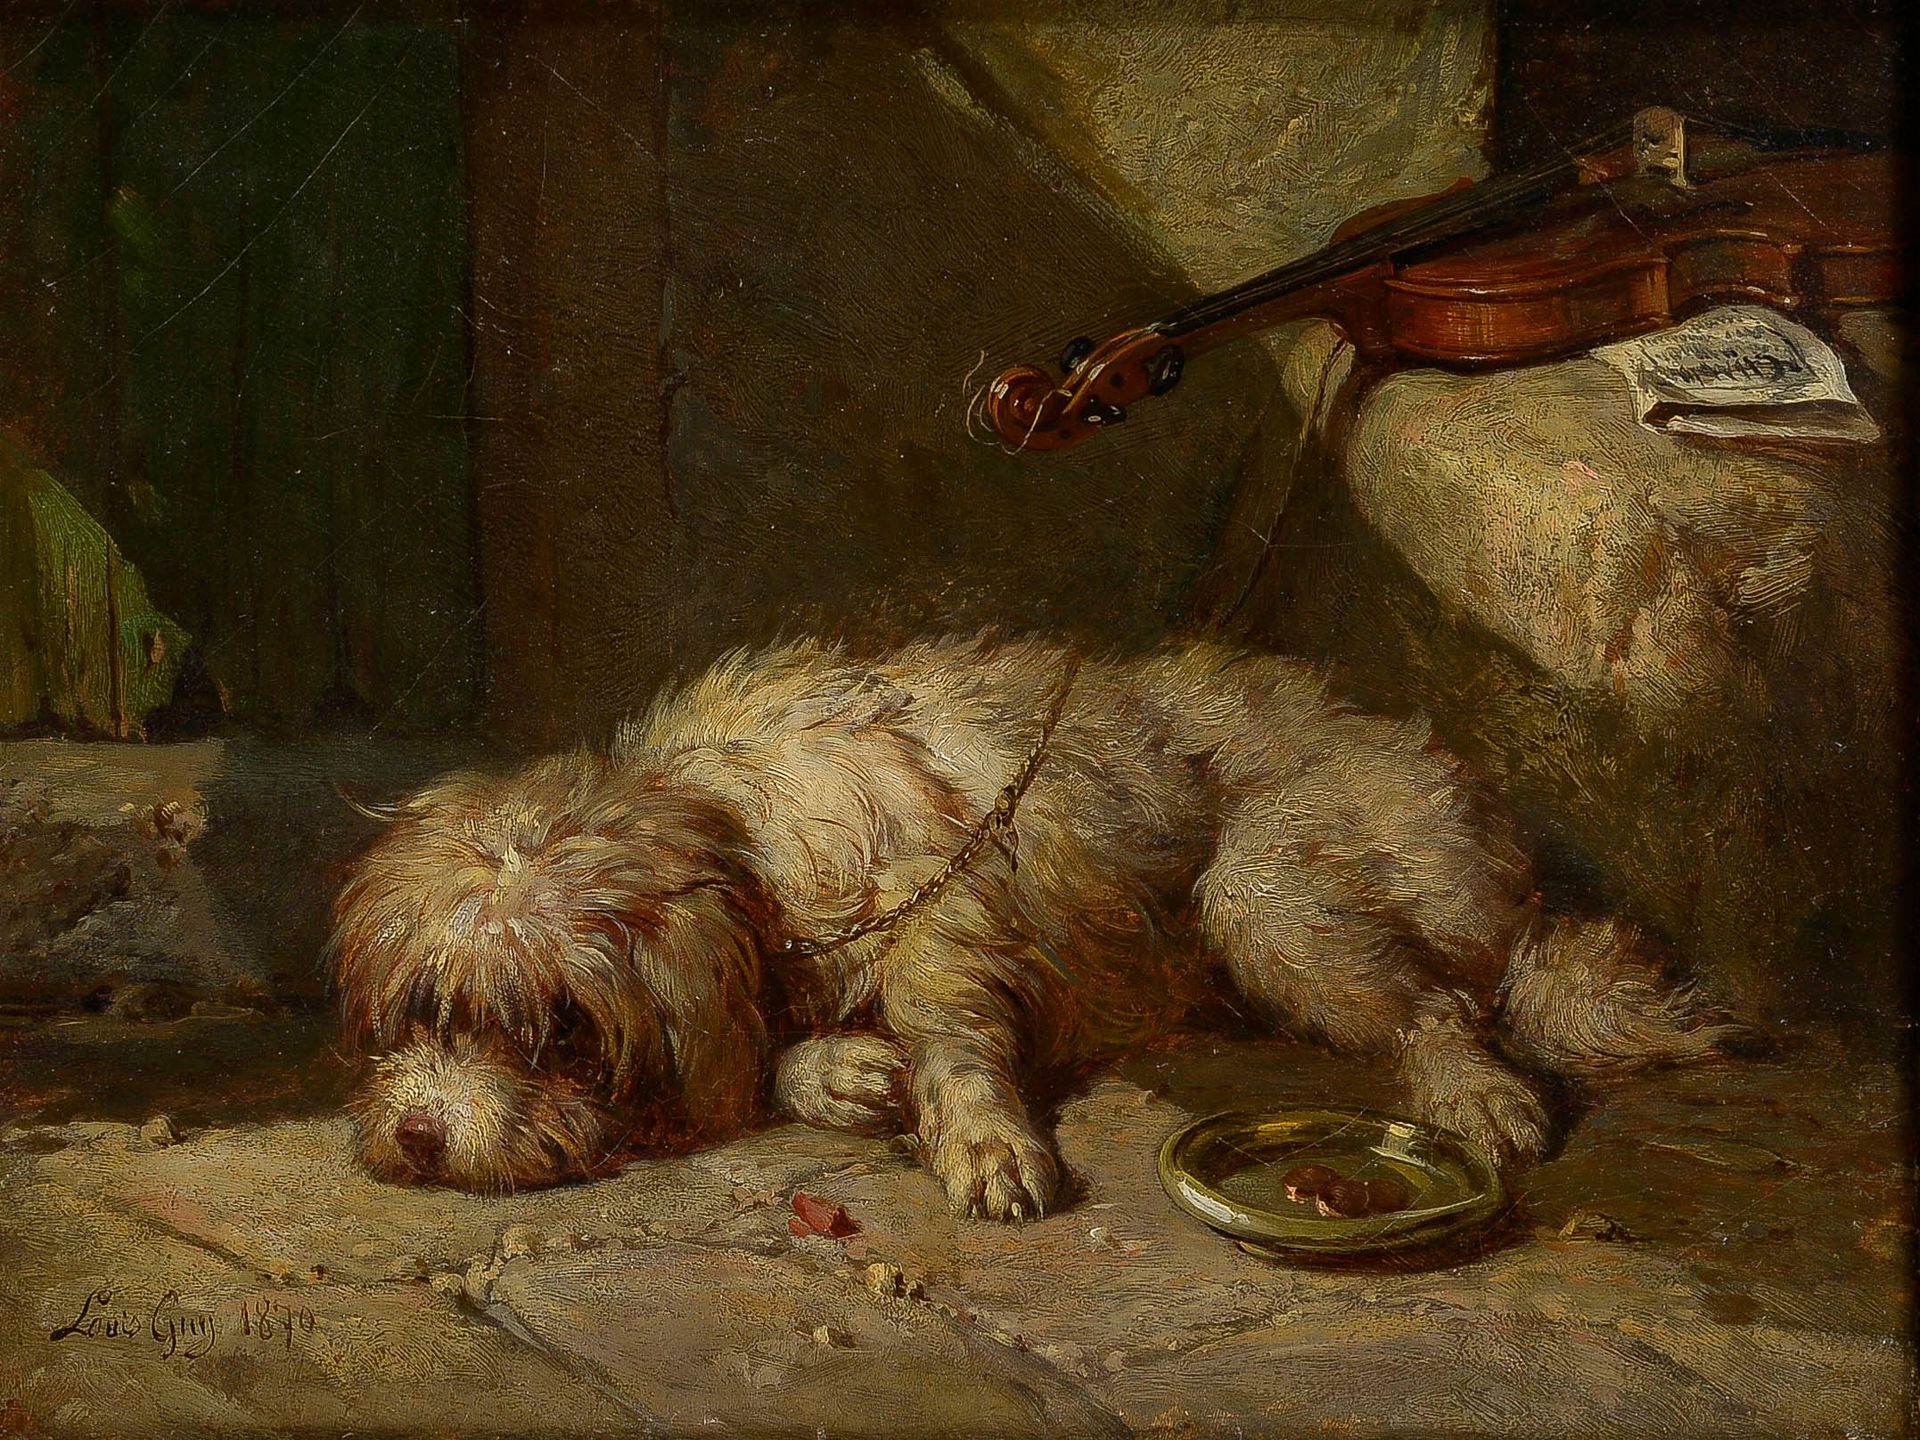 Null 路易-盖伊 (1824-1888)

提琴手的狗，1870年

布面油画，左下方有签名和日期

25 x 33 cm

小型修复